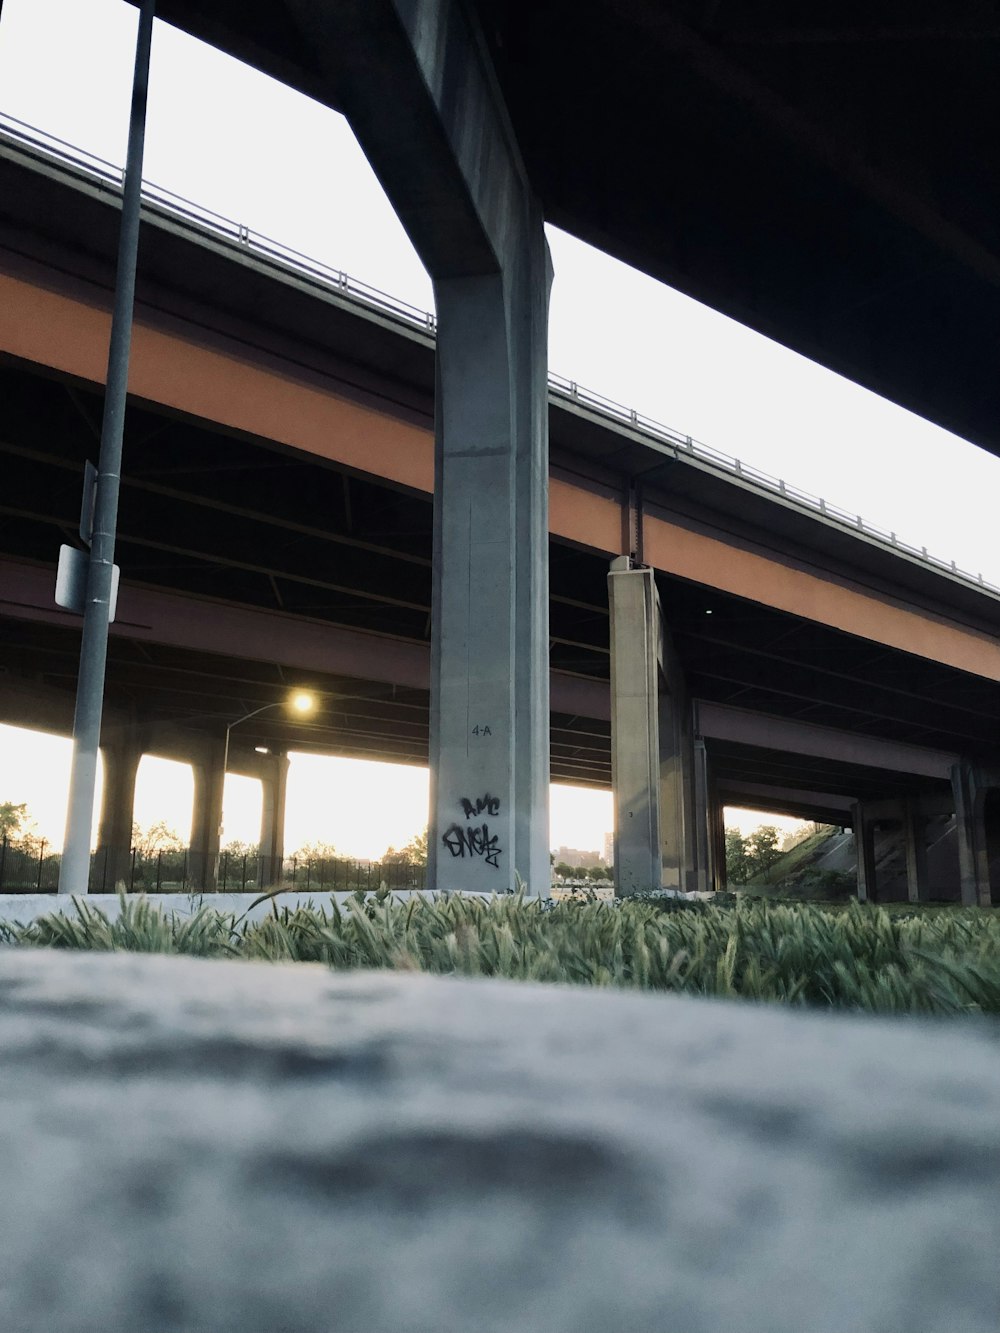 a skateboarder is doing a trick under a bridge